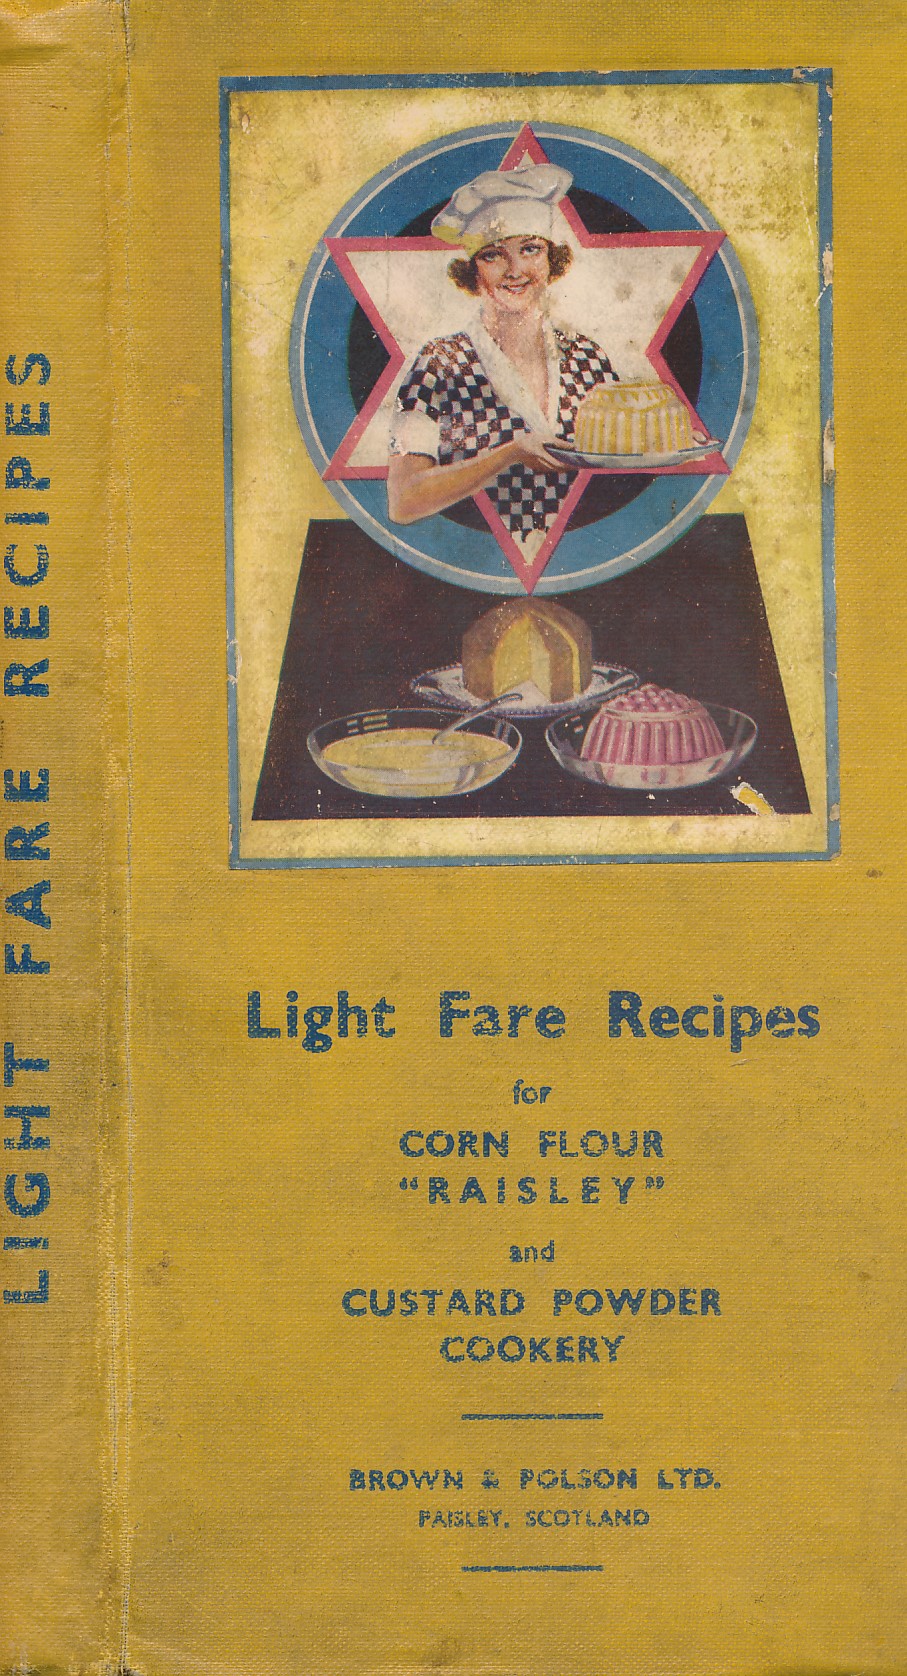 Light Fare recipes for Corn Flour "Raisley" and Custard Powder Cookery